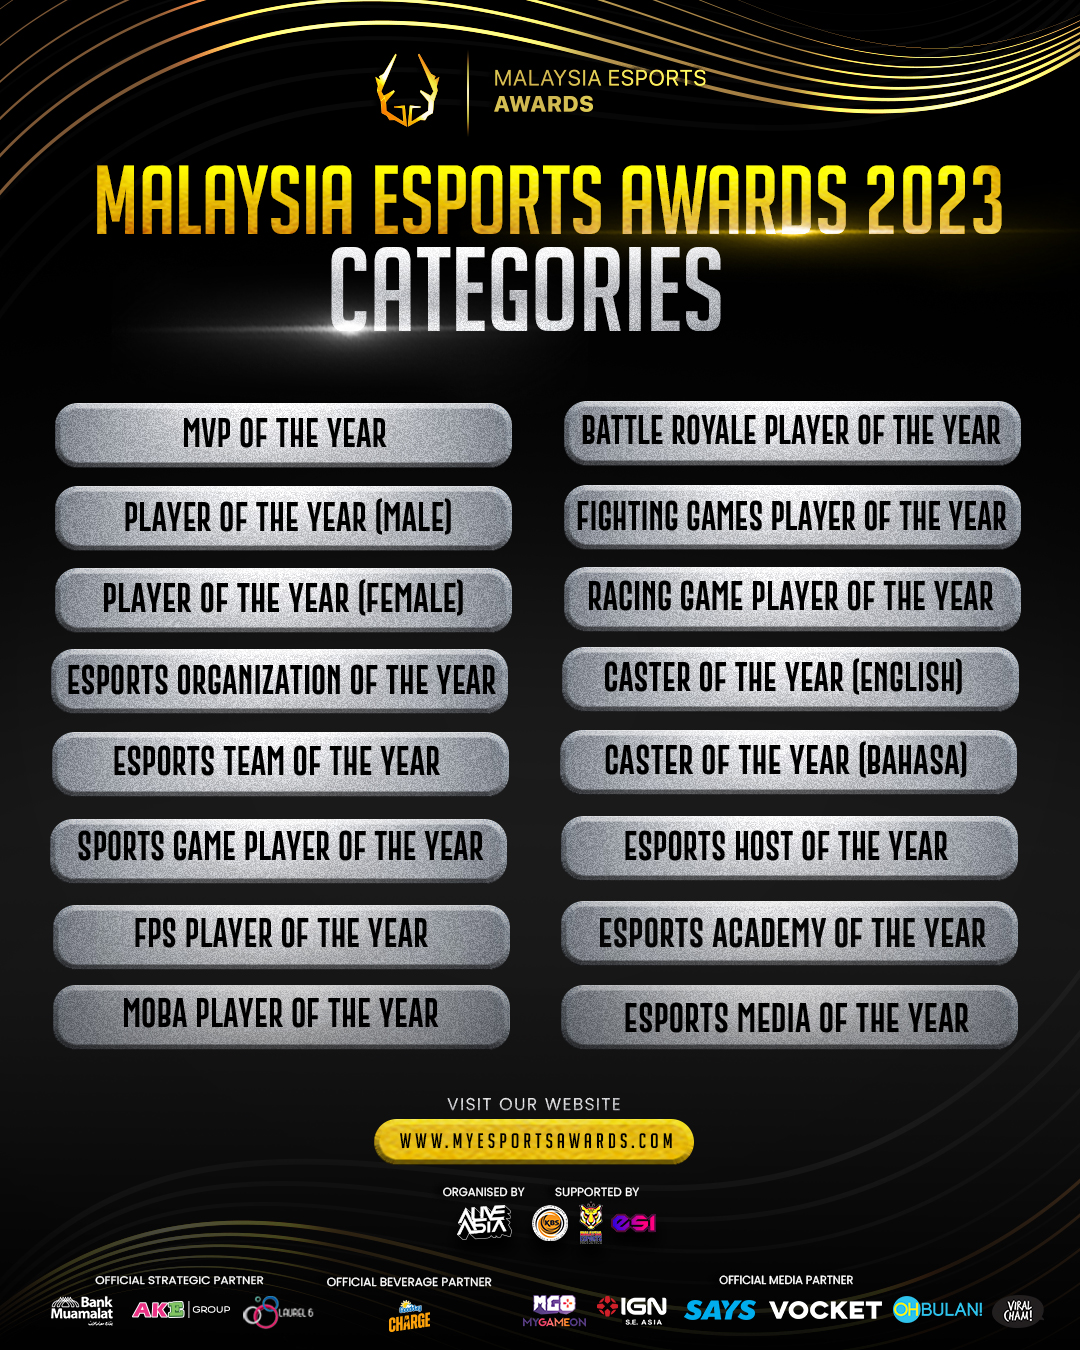 Image from Malaysia Esports Awards